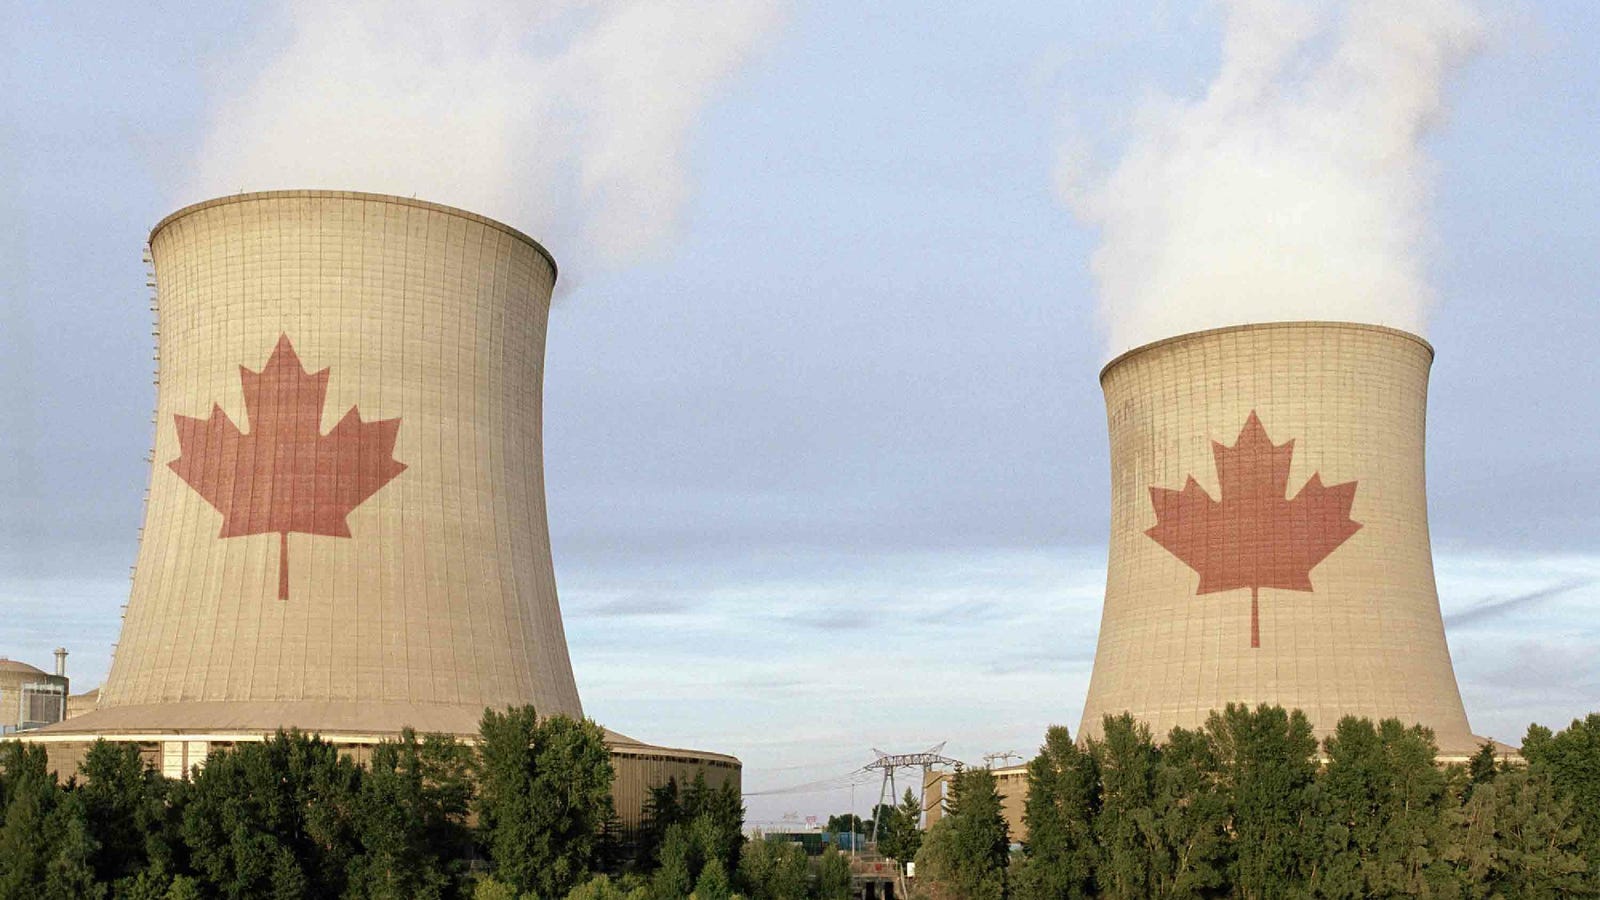 Maple Syrup Reactors Safe, Canadian Prime Minister Reassures